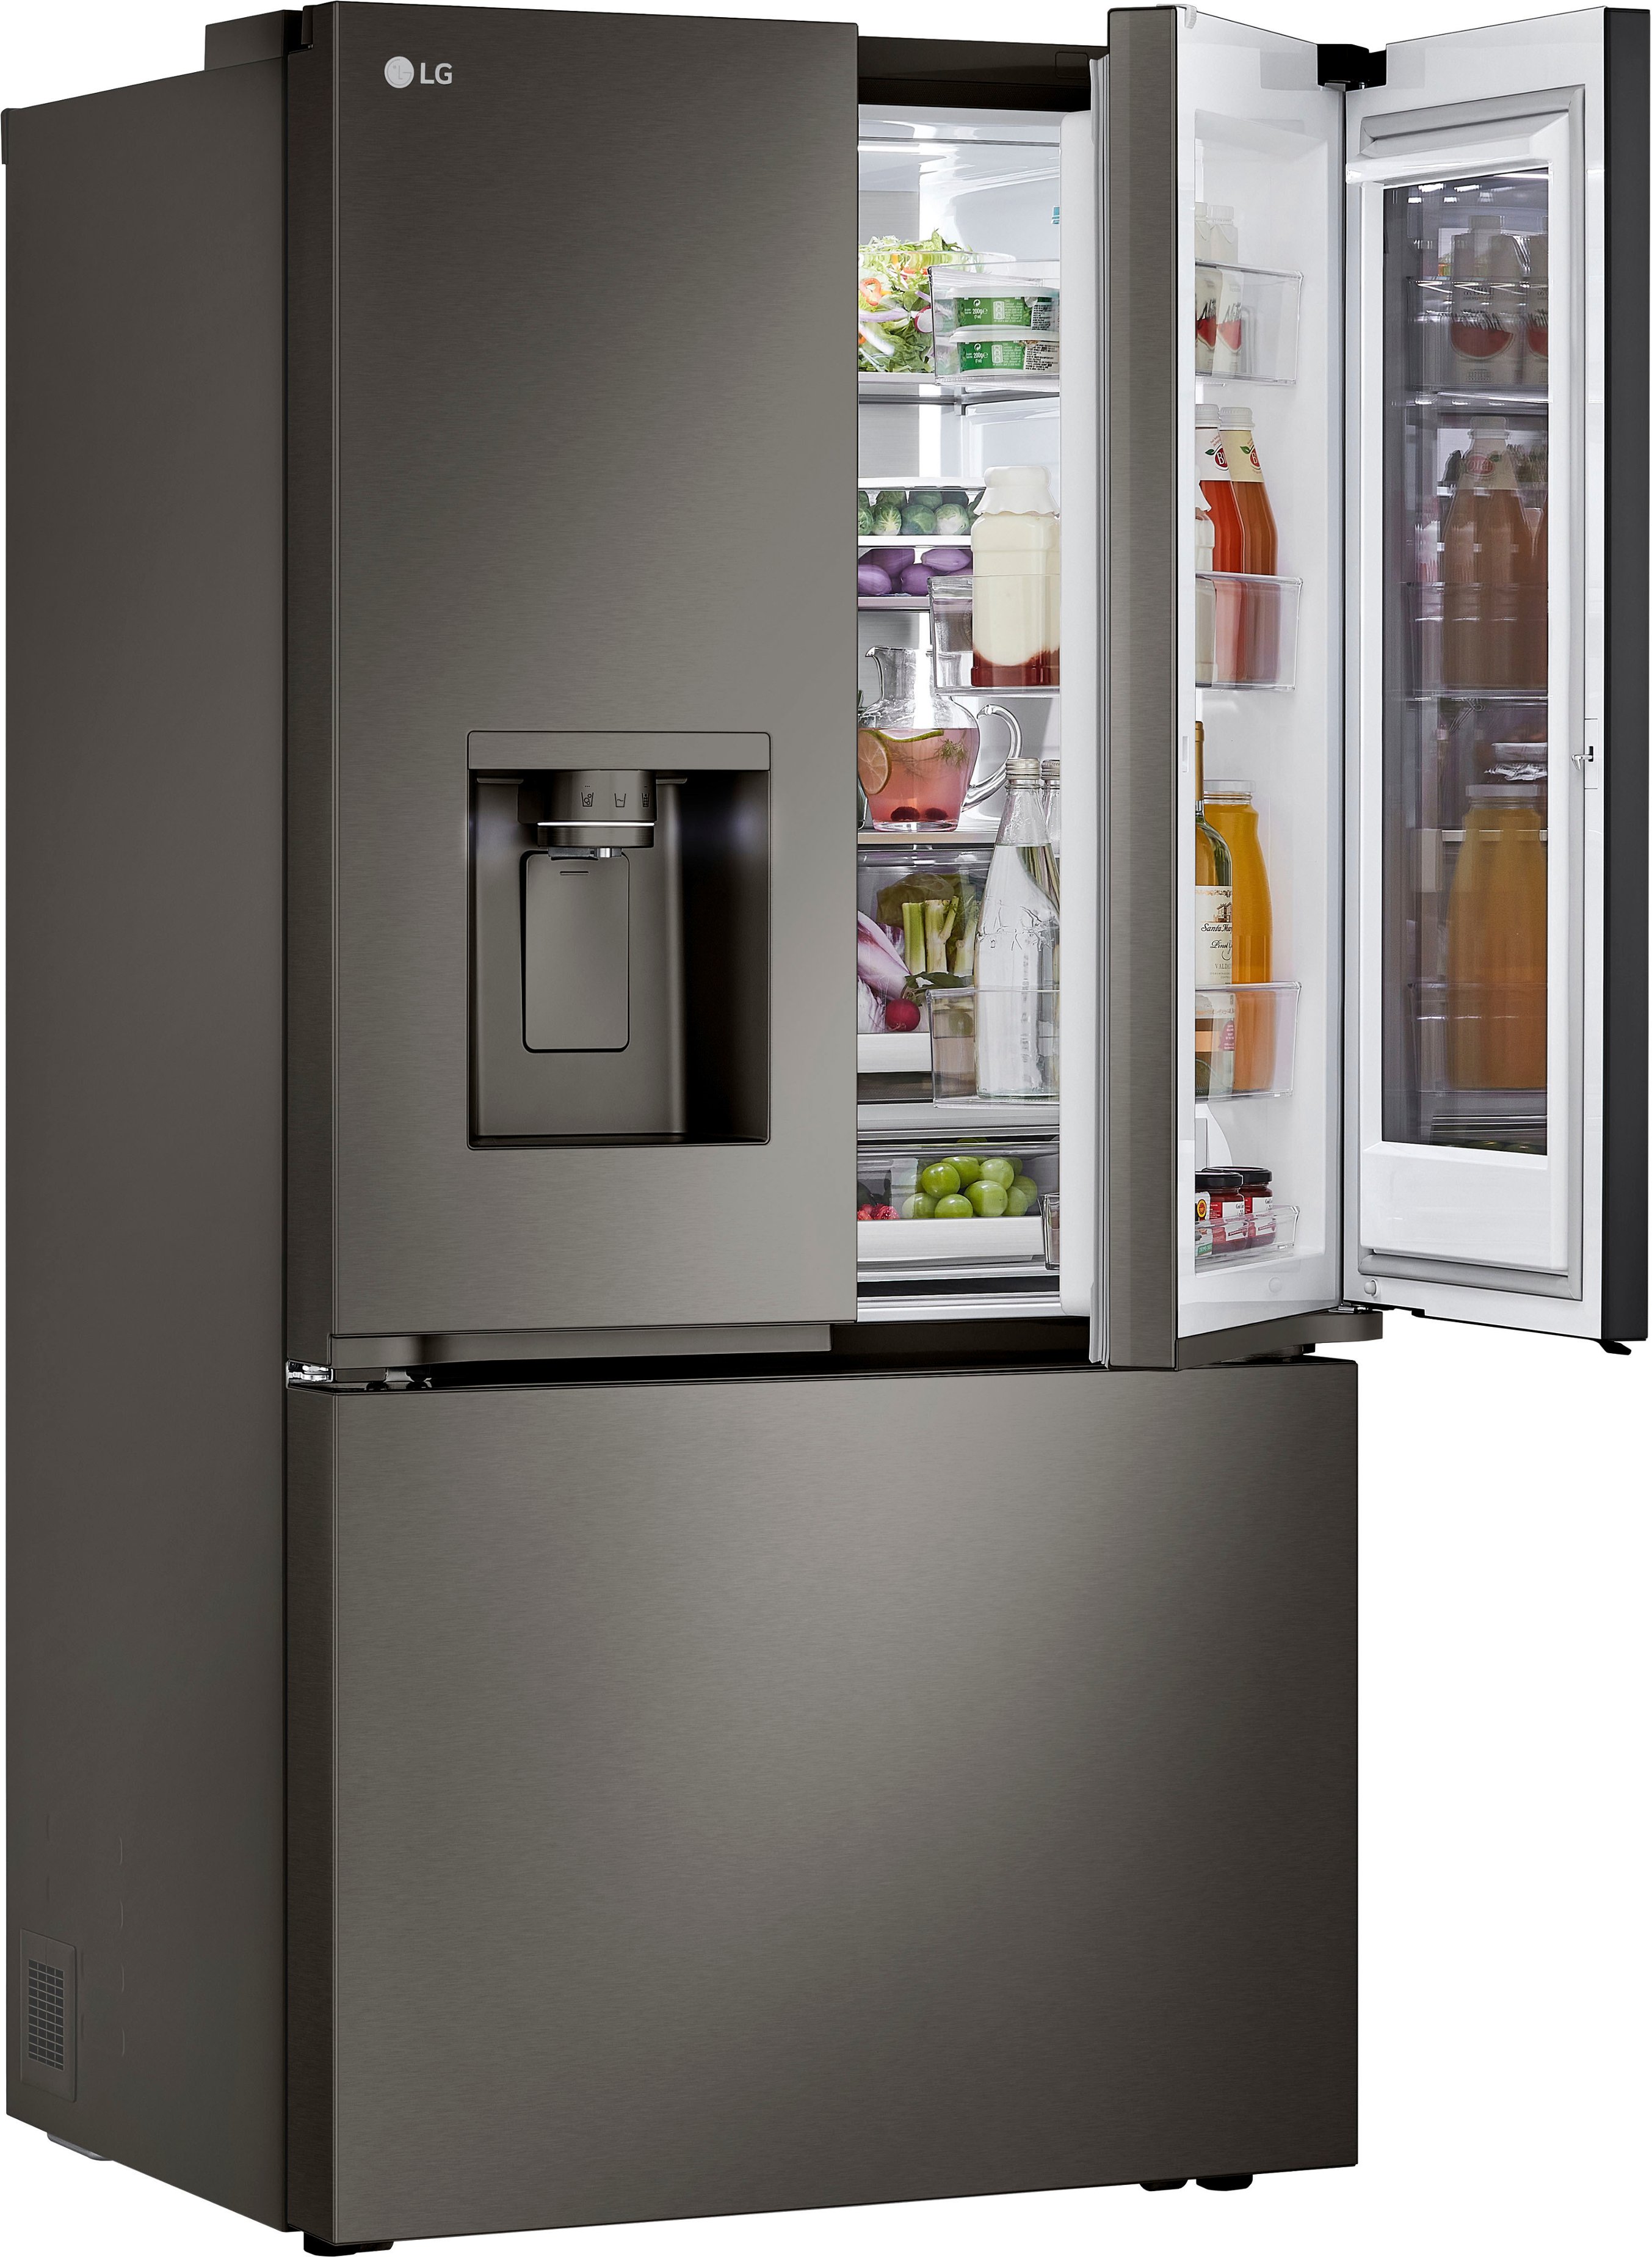 LG 25.5 Cu. Ft. French Door Counter-Depth Smart Refrigerator with InstaView  Stainless Steel LRFOC2606S - Best Buy